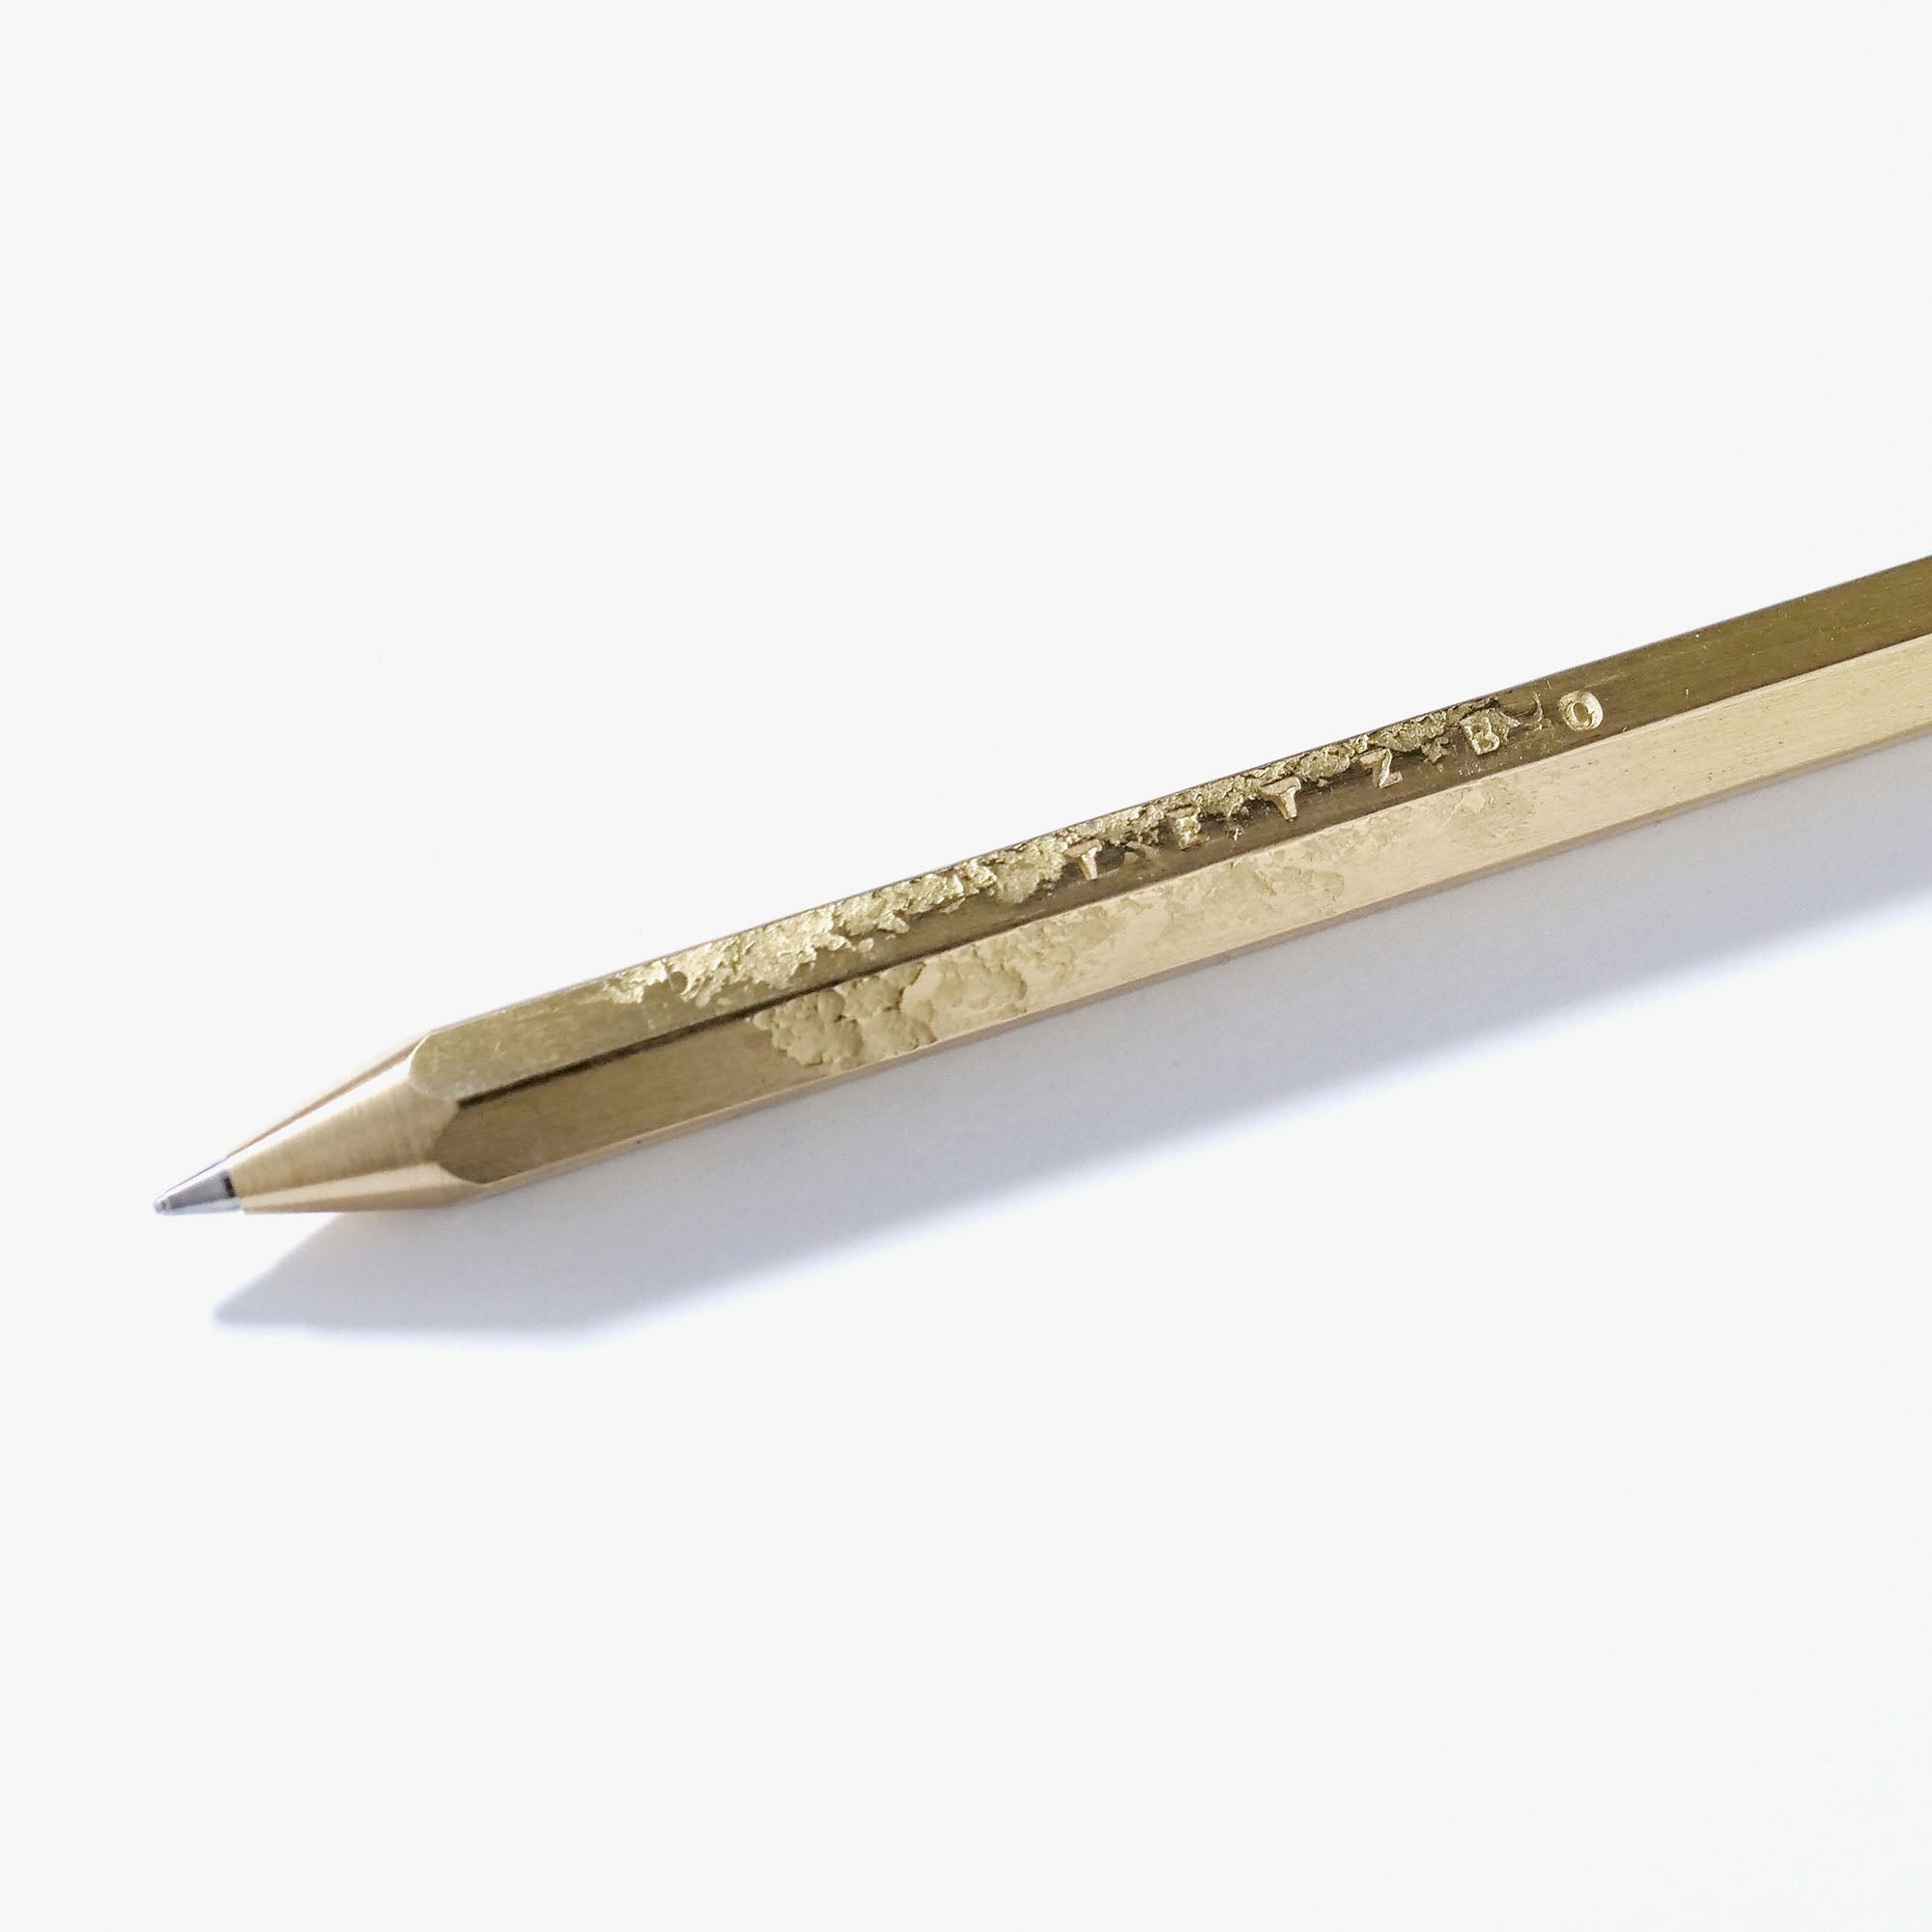 Tetzbo - Chibien Ballpoint Pen (Brass)